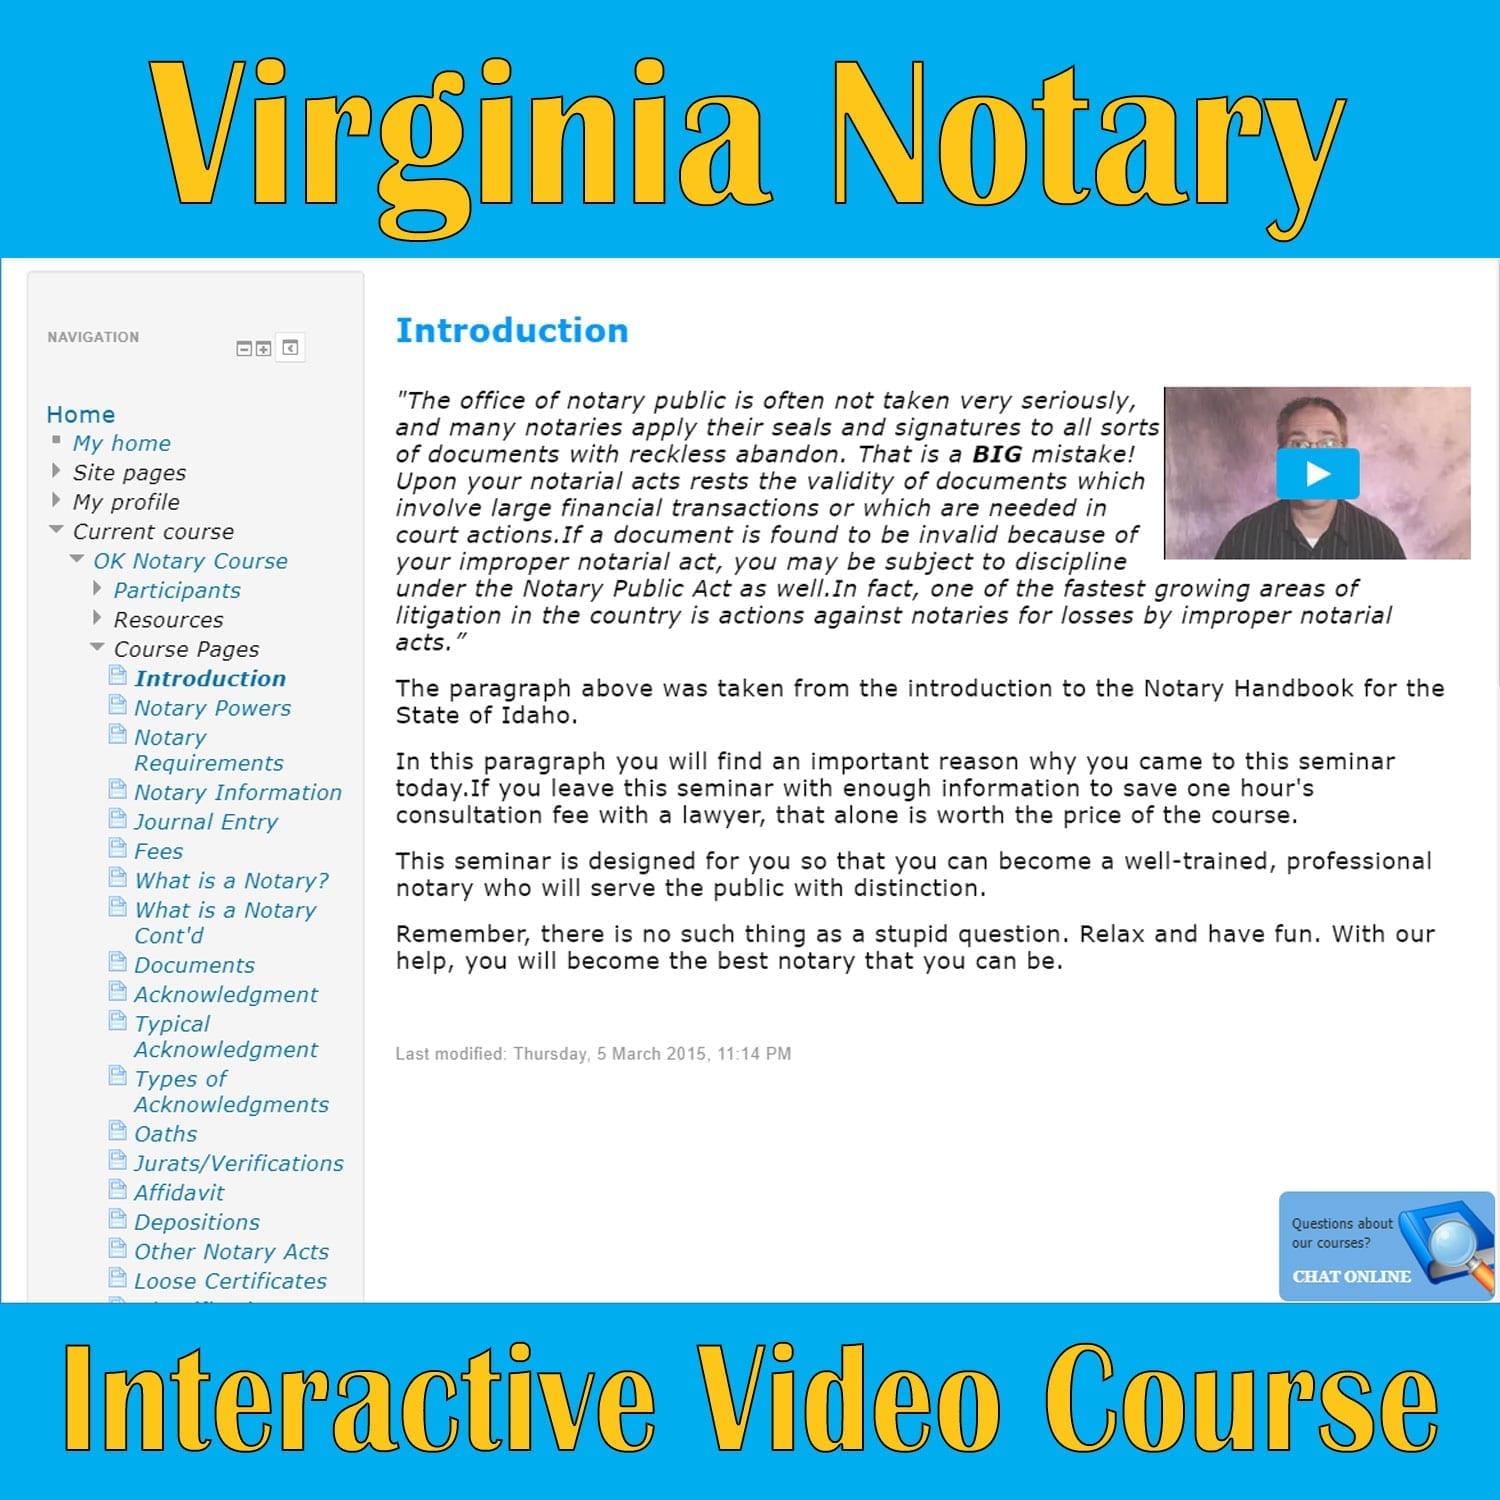 Virginia Notary Online Course